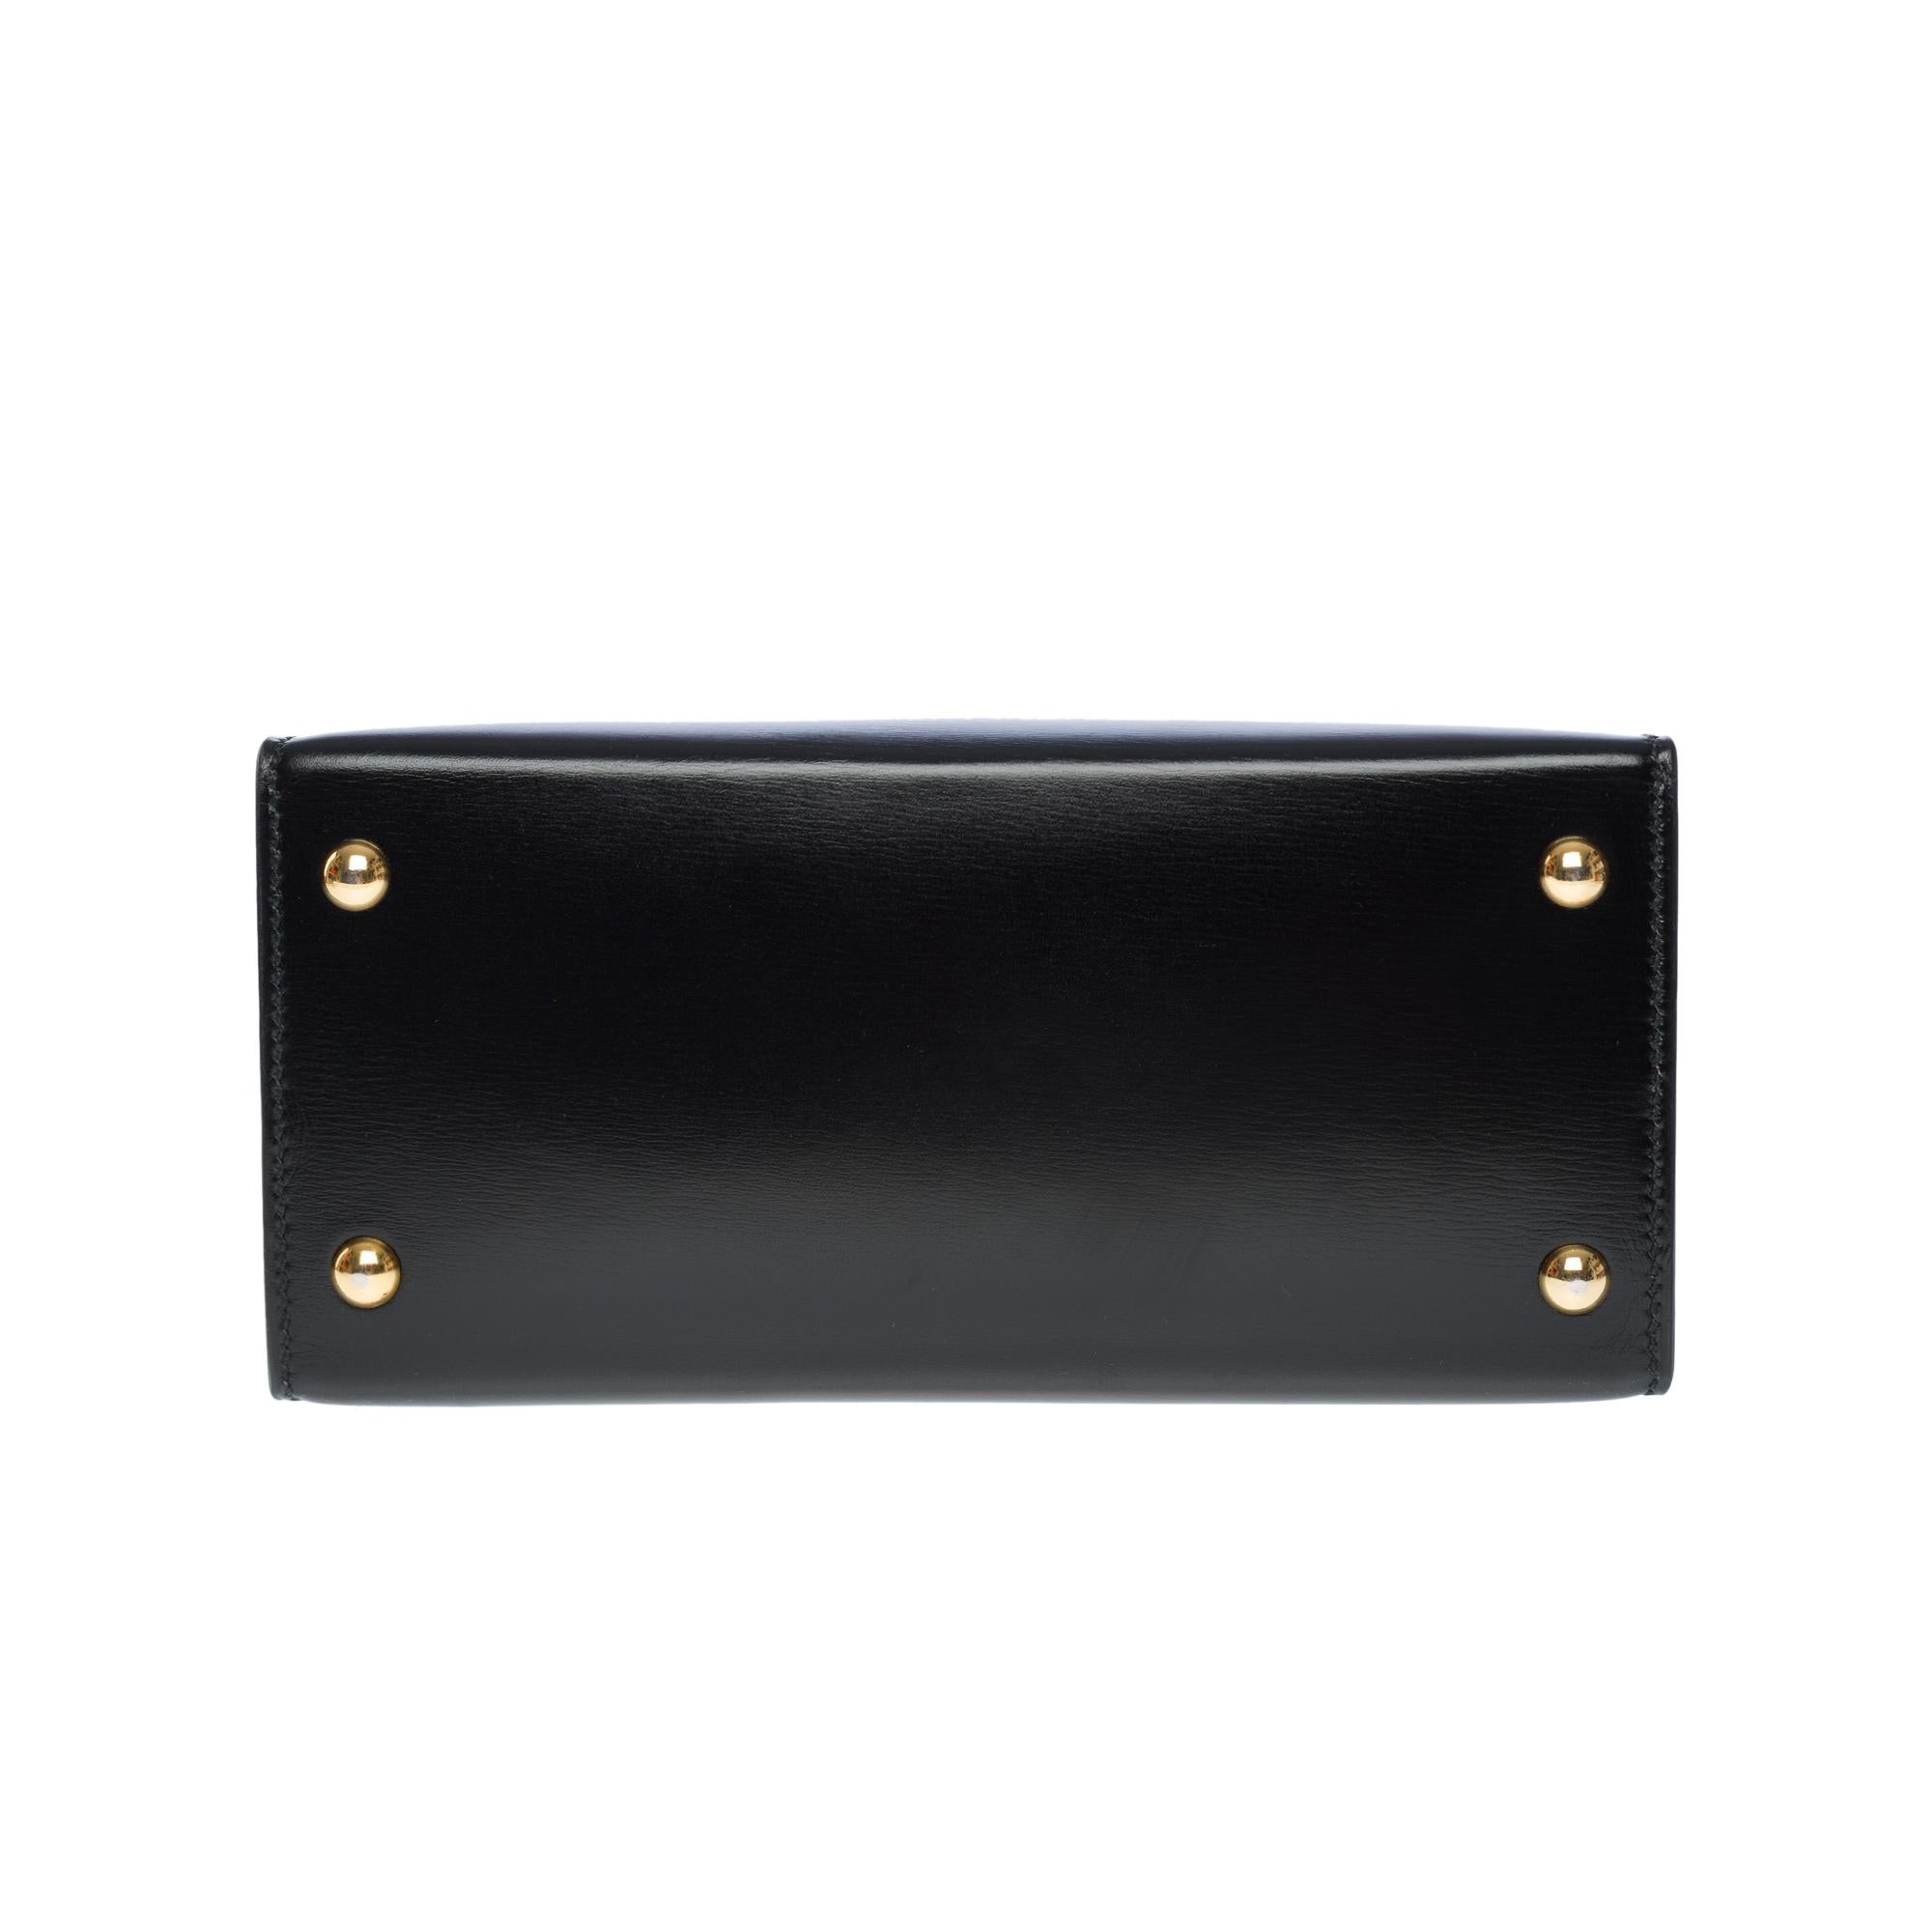 Rare Hermès Mini Kelly 20cm handbag double strap in black box calfskin, GHW 6